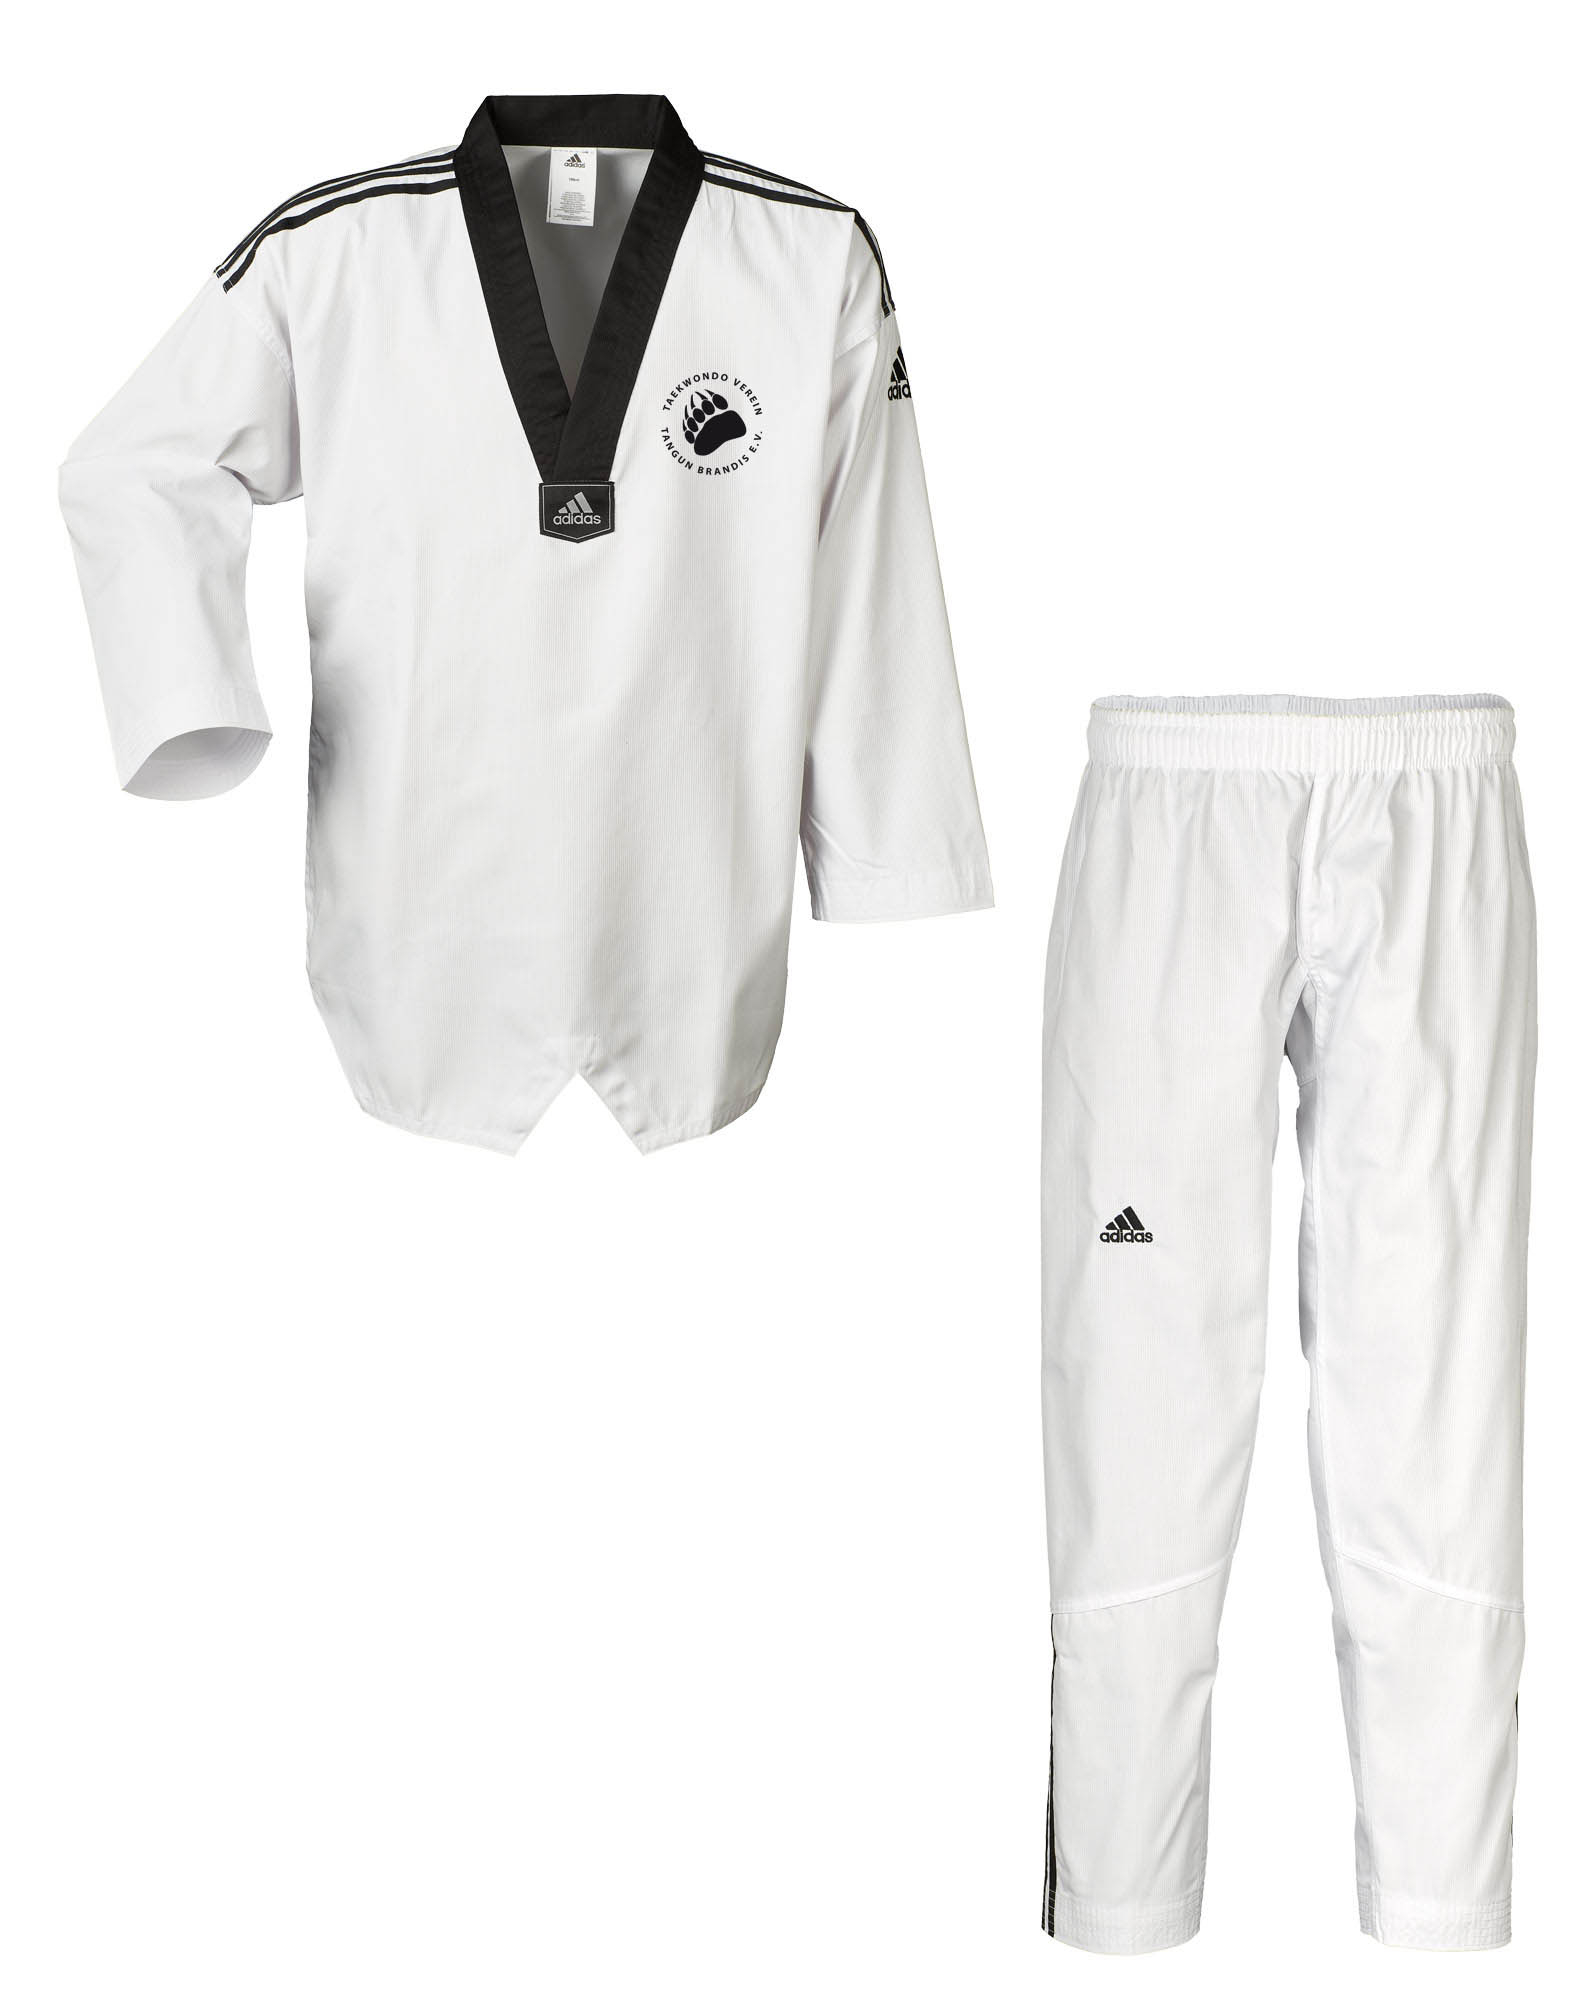 adidas Taekwondoanzug, Adi Club 3 stripes, schwarzes Revers, ADITCB02-Taekwondo Verein Tangun Brandi